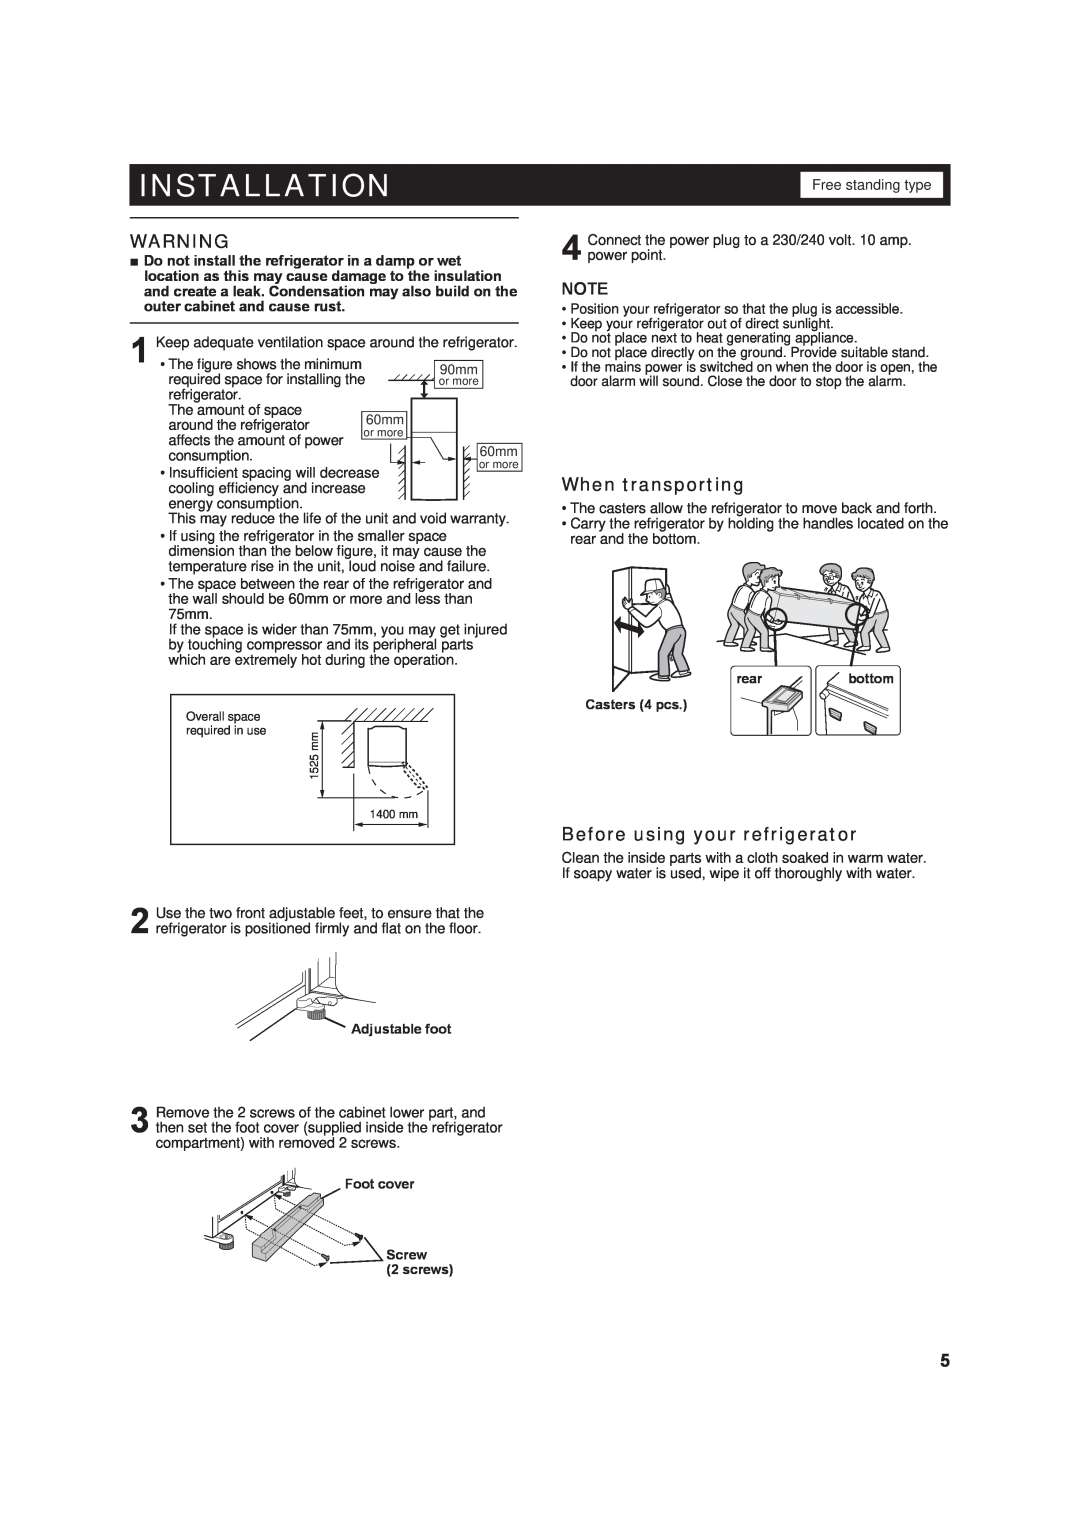 Sharp SJ-GJ584V operation manual Installation, When transporting, Before using your refrigerator 